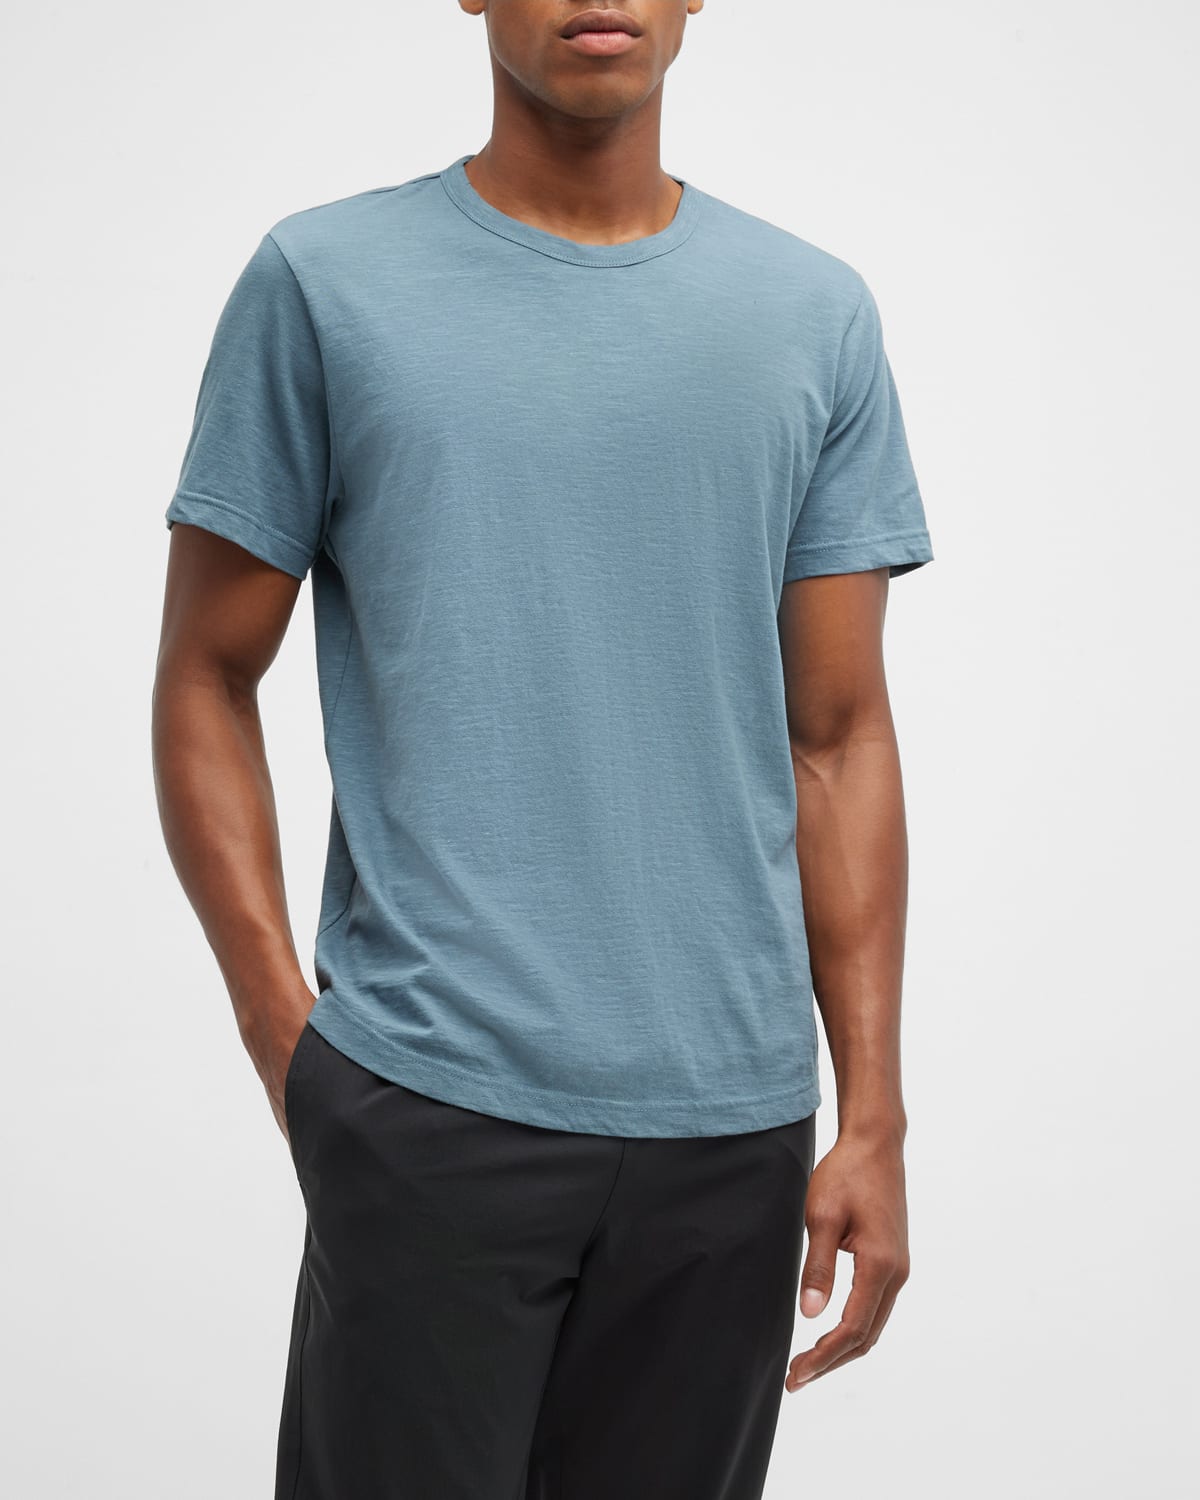 Men's Curved Hem Cotton T-Shirt